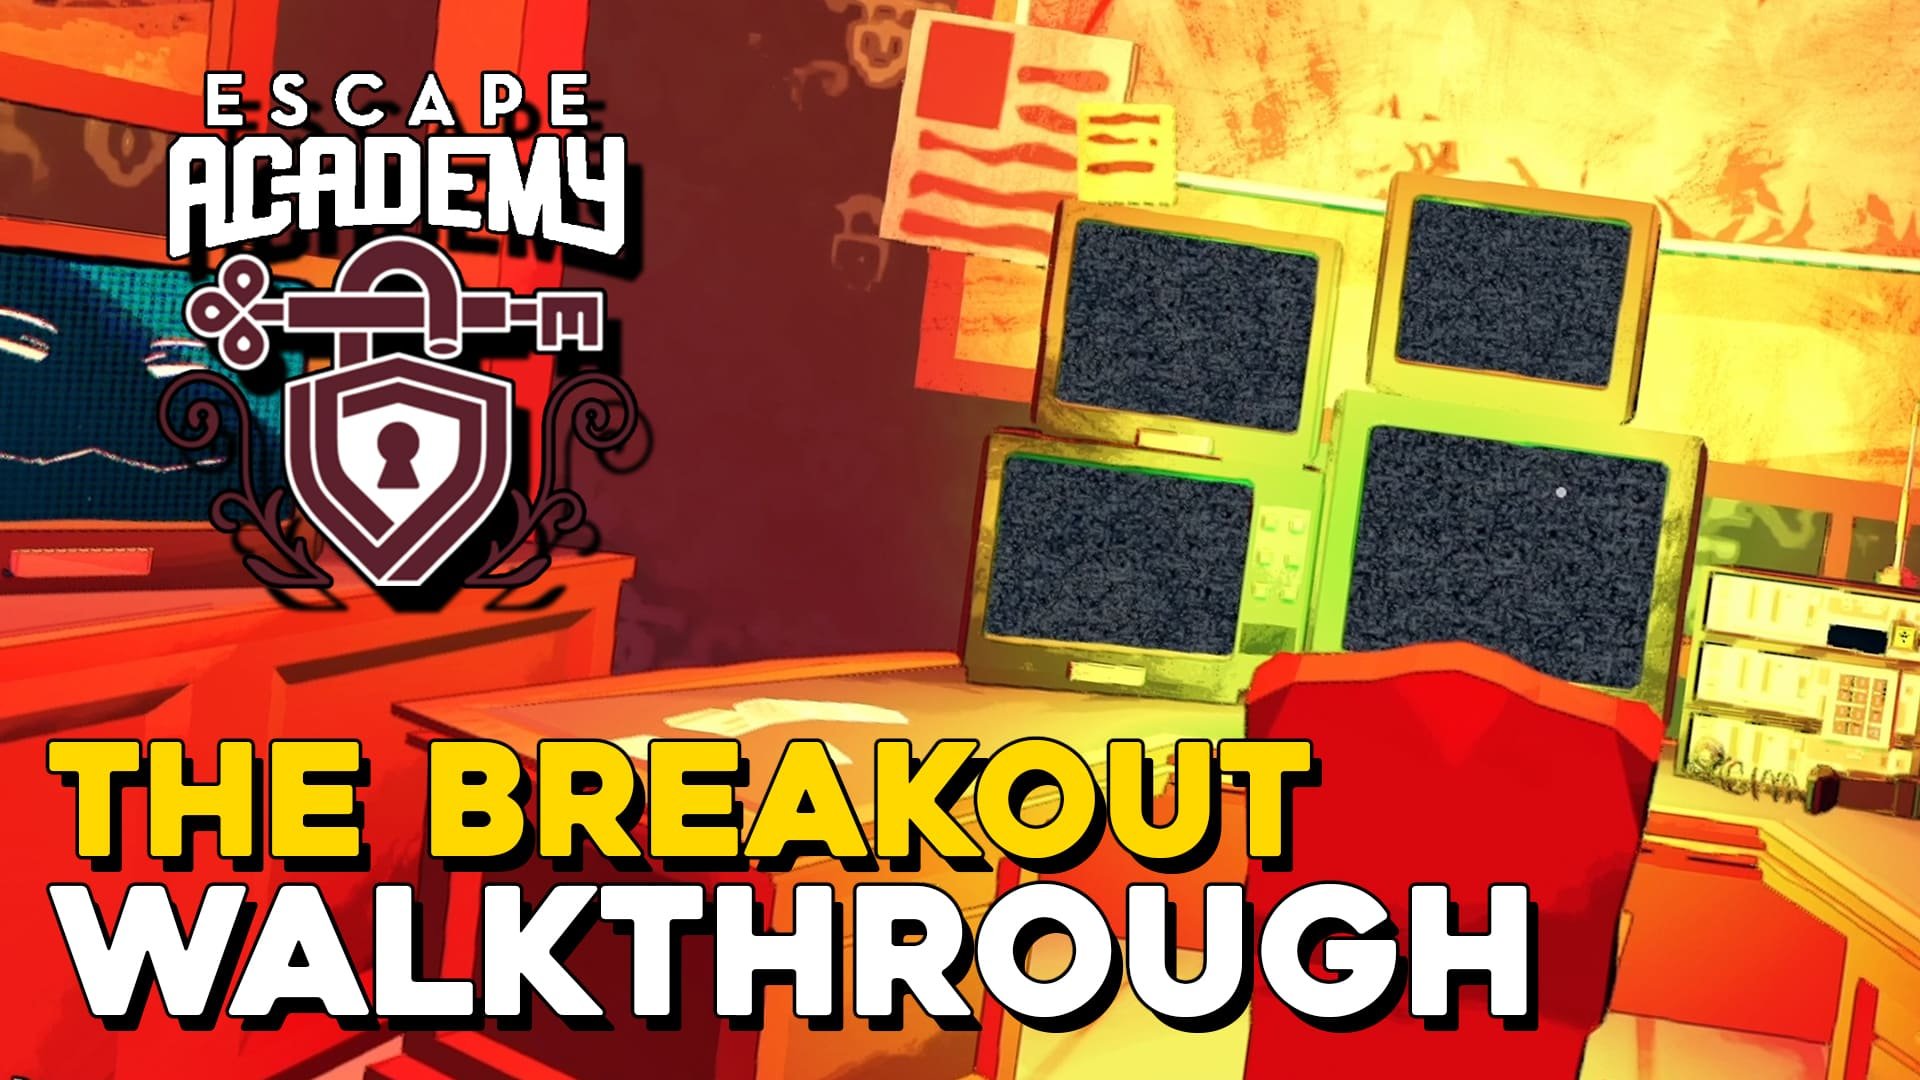 Escape Academy The Breakout Walkthrough